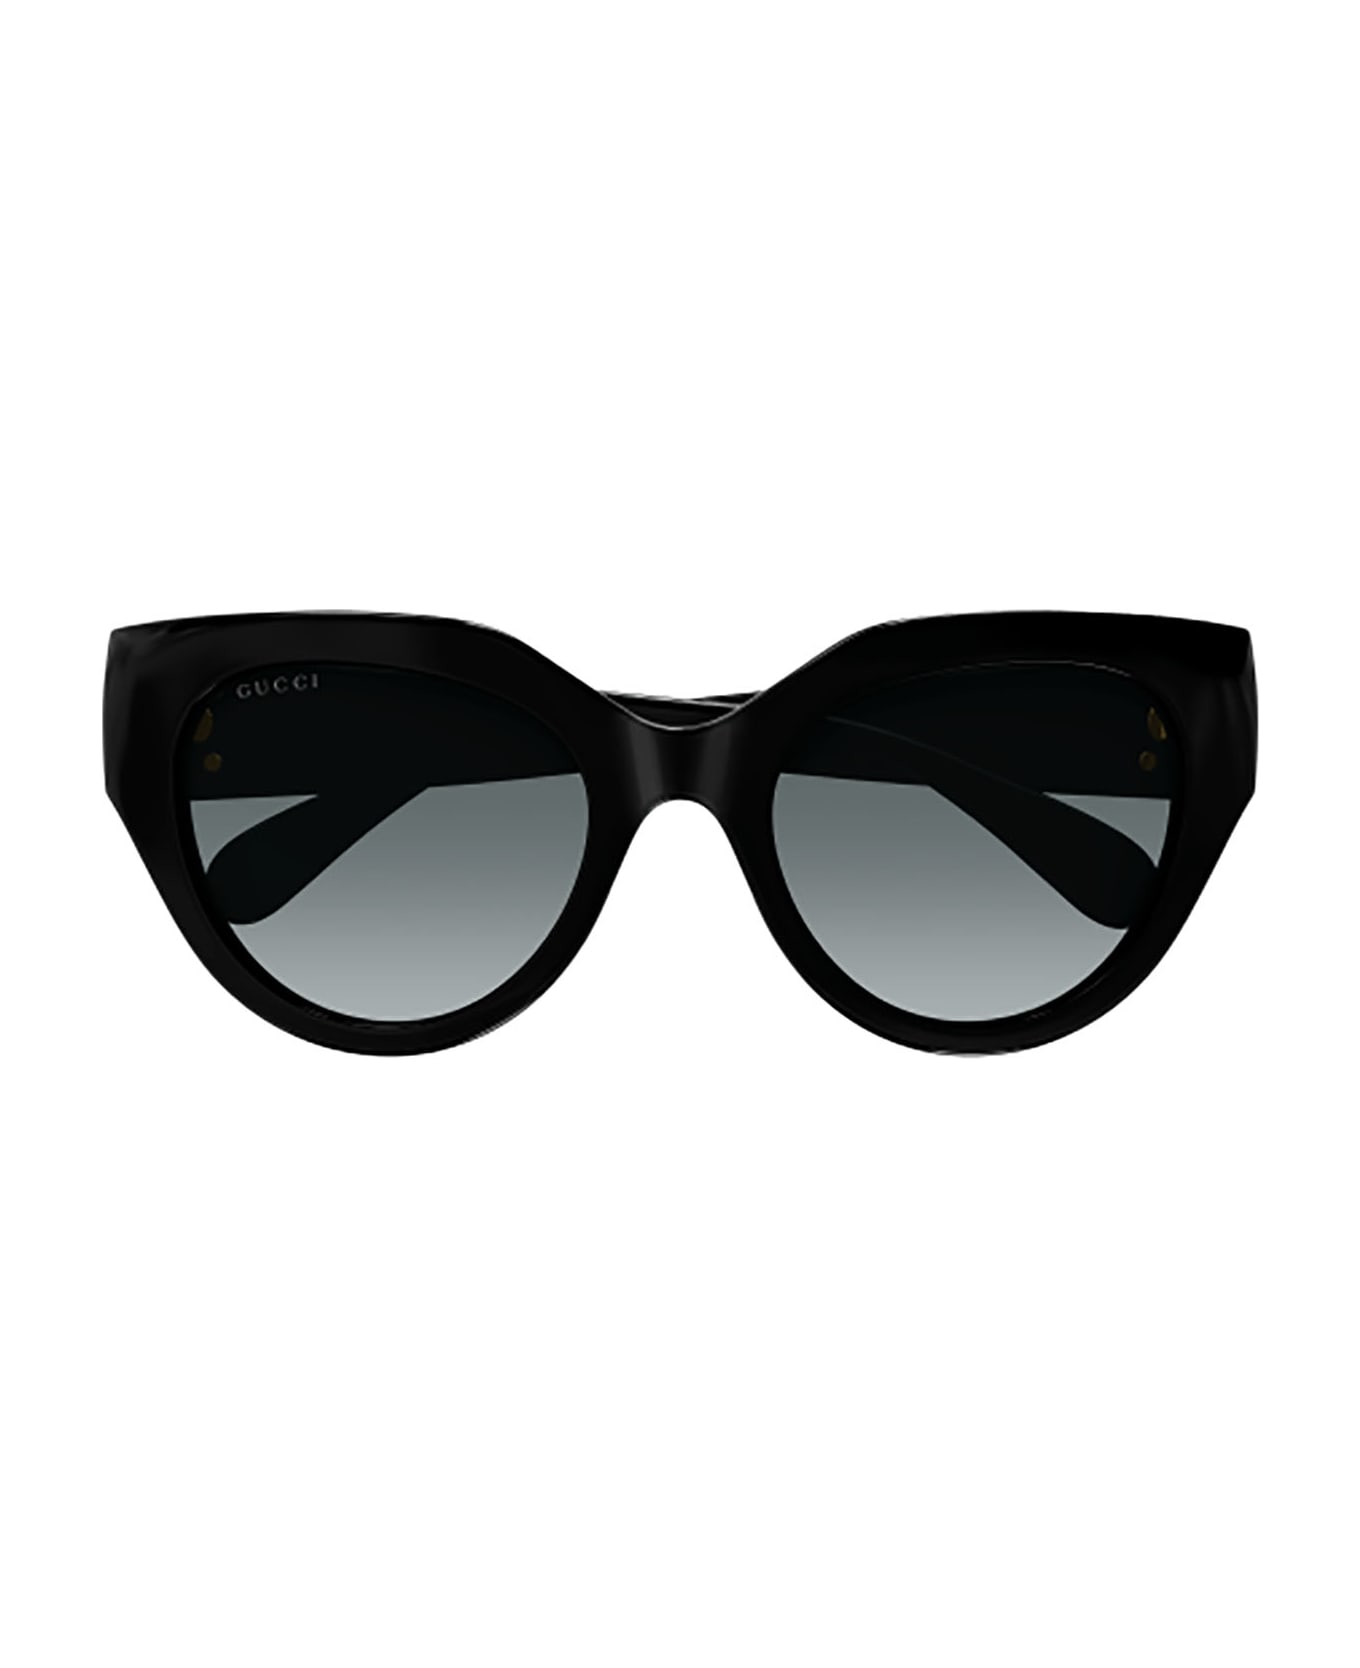 Gucci Eyewear GG1408S Sunglasses - Black Black Grey